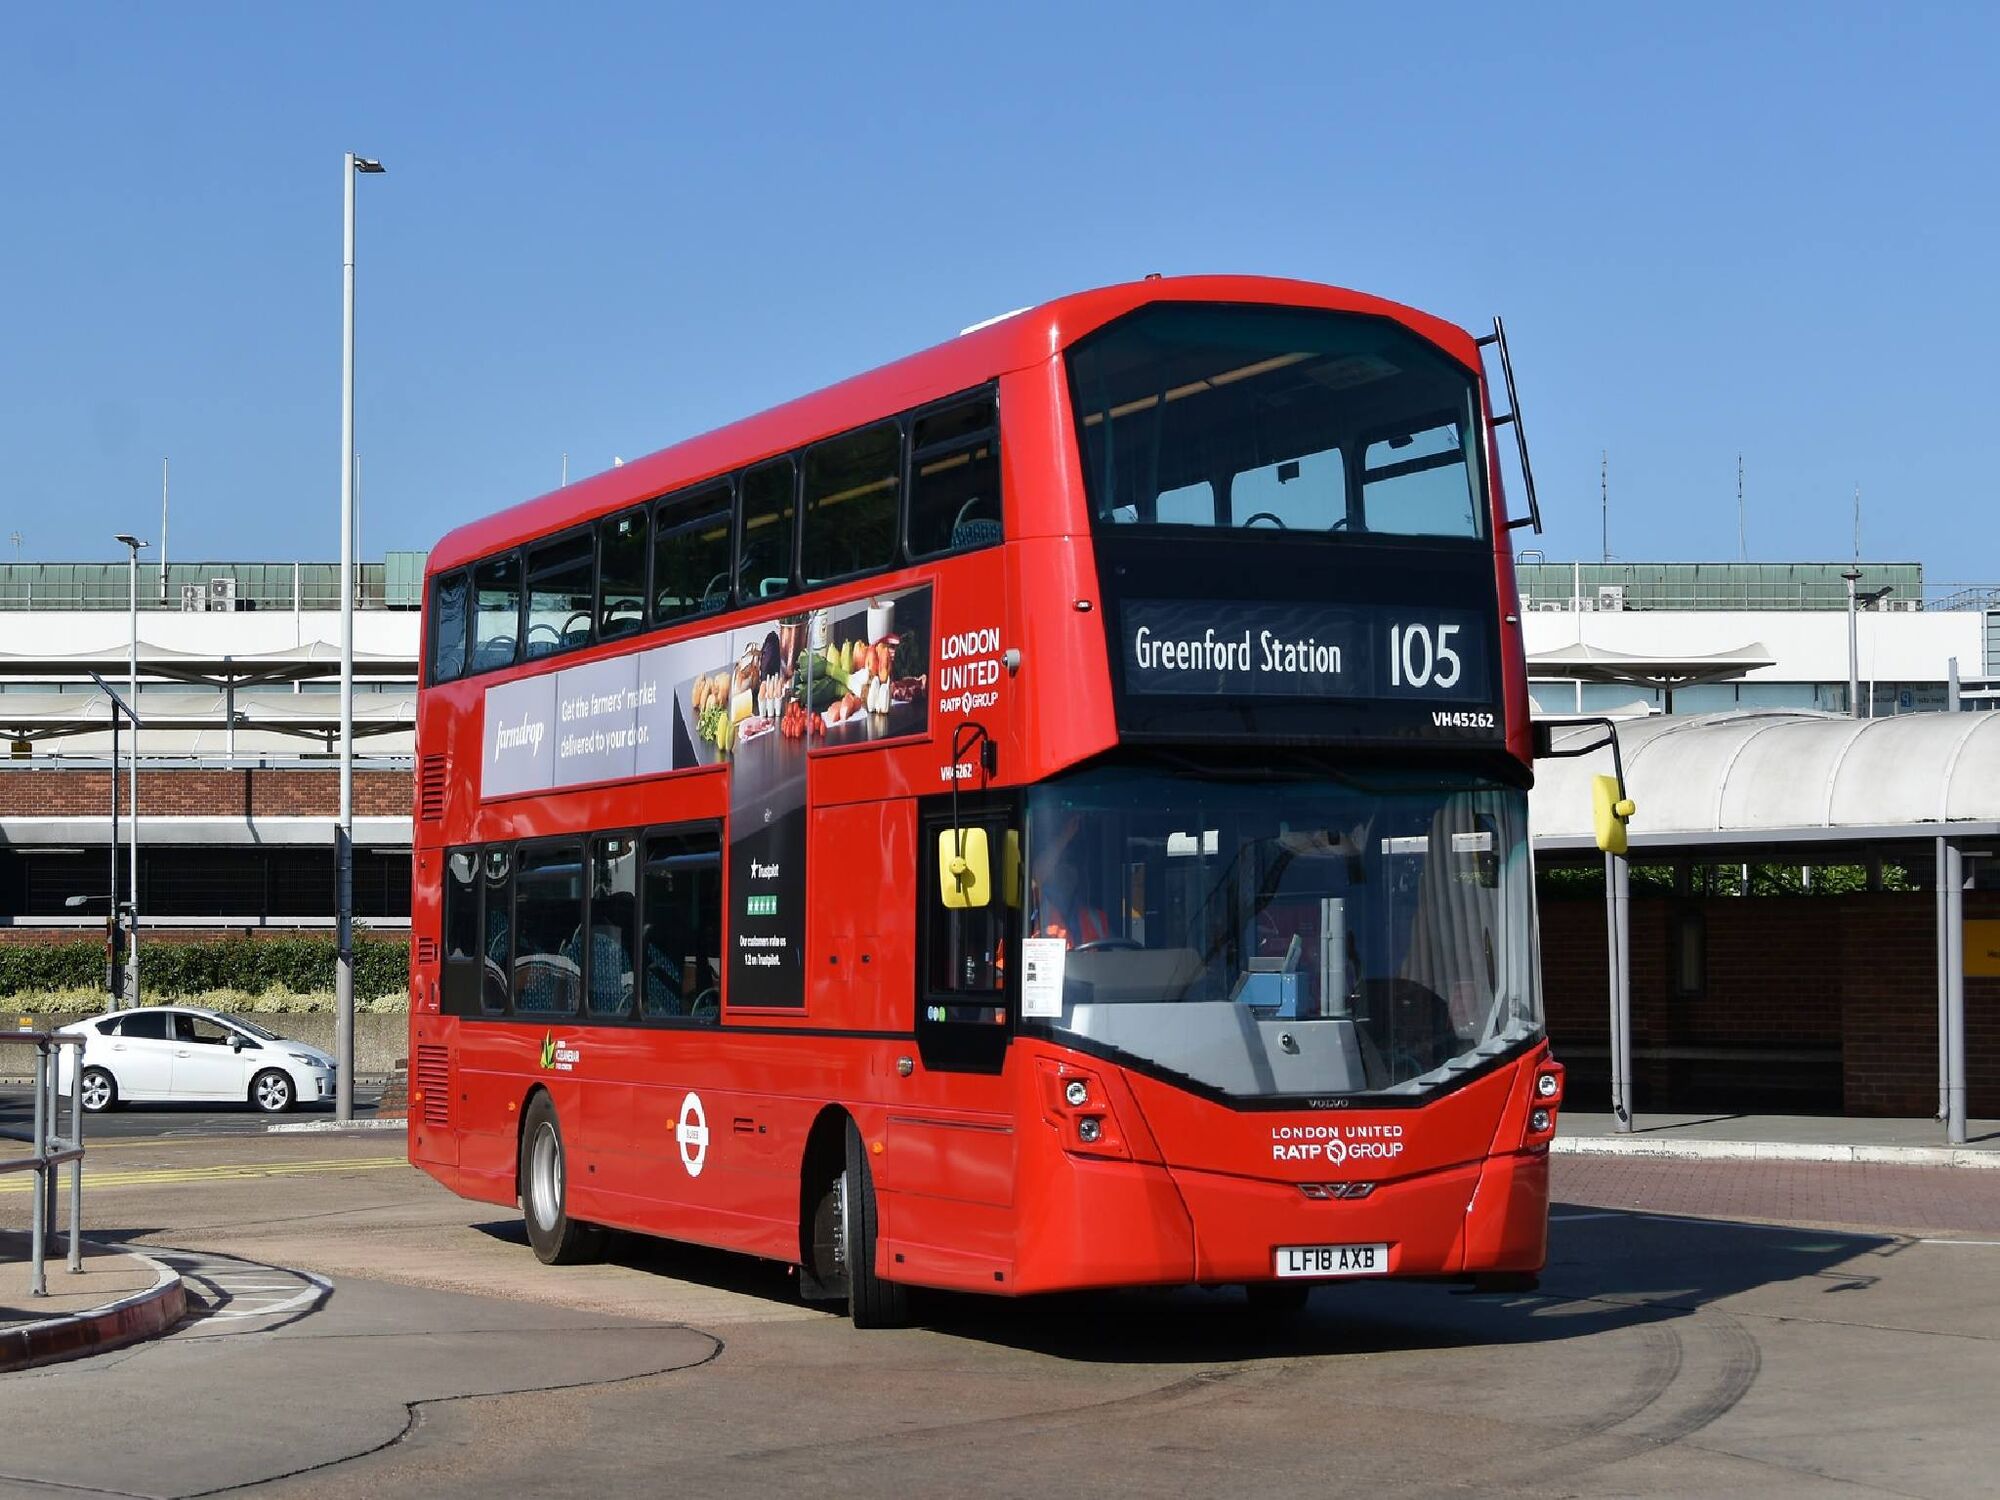 Transport for London bus fleet now meet ULEZ standards. 300 e-buses expected in 2021 ...